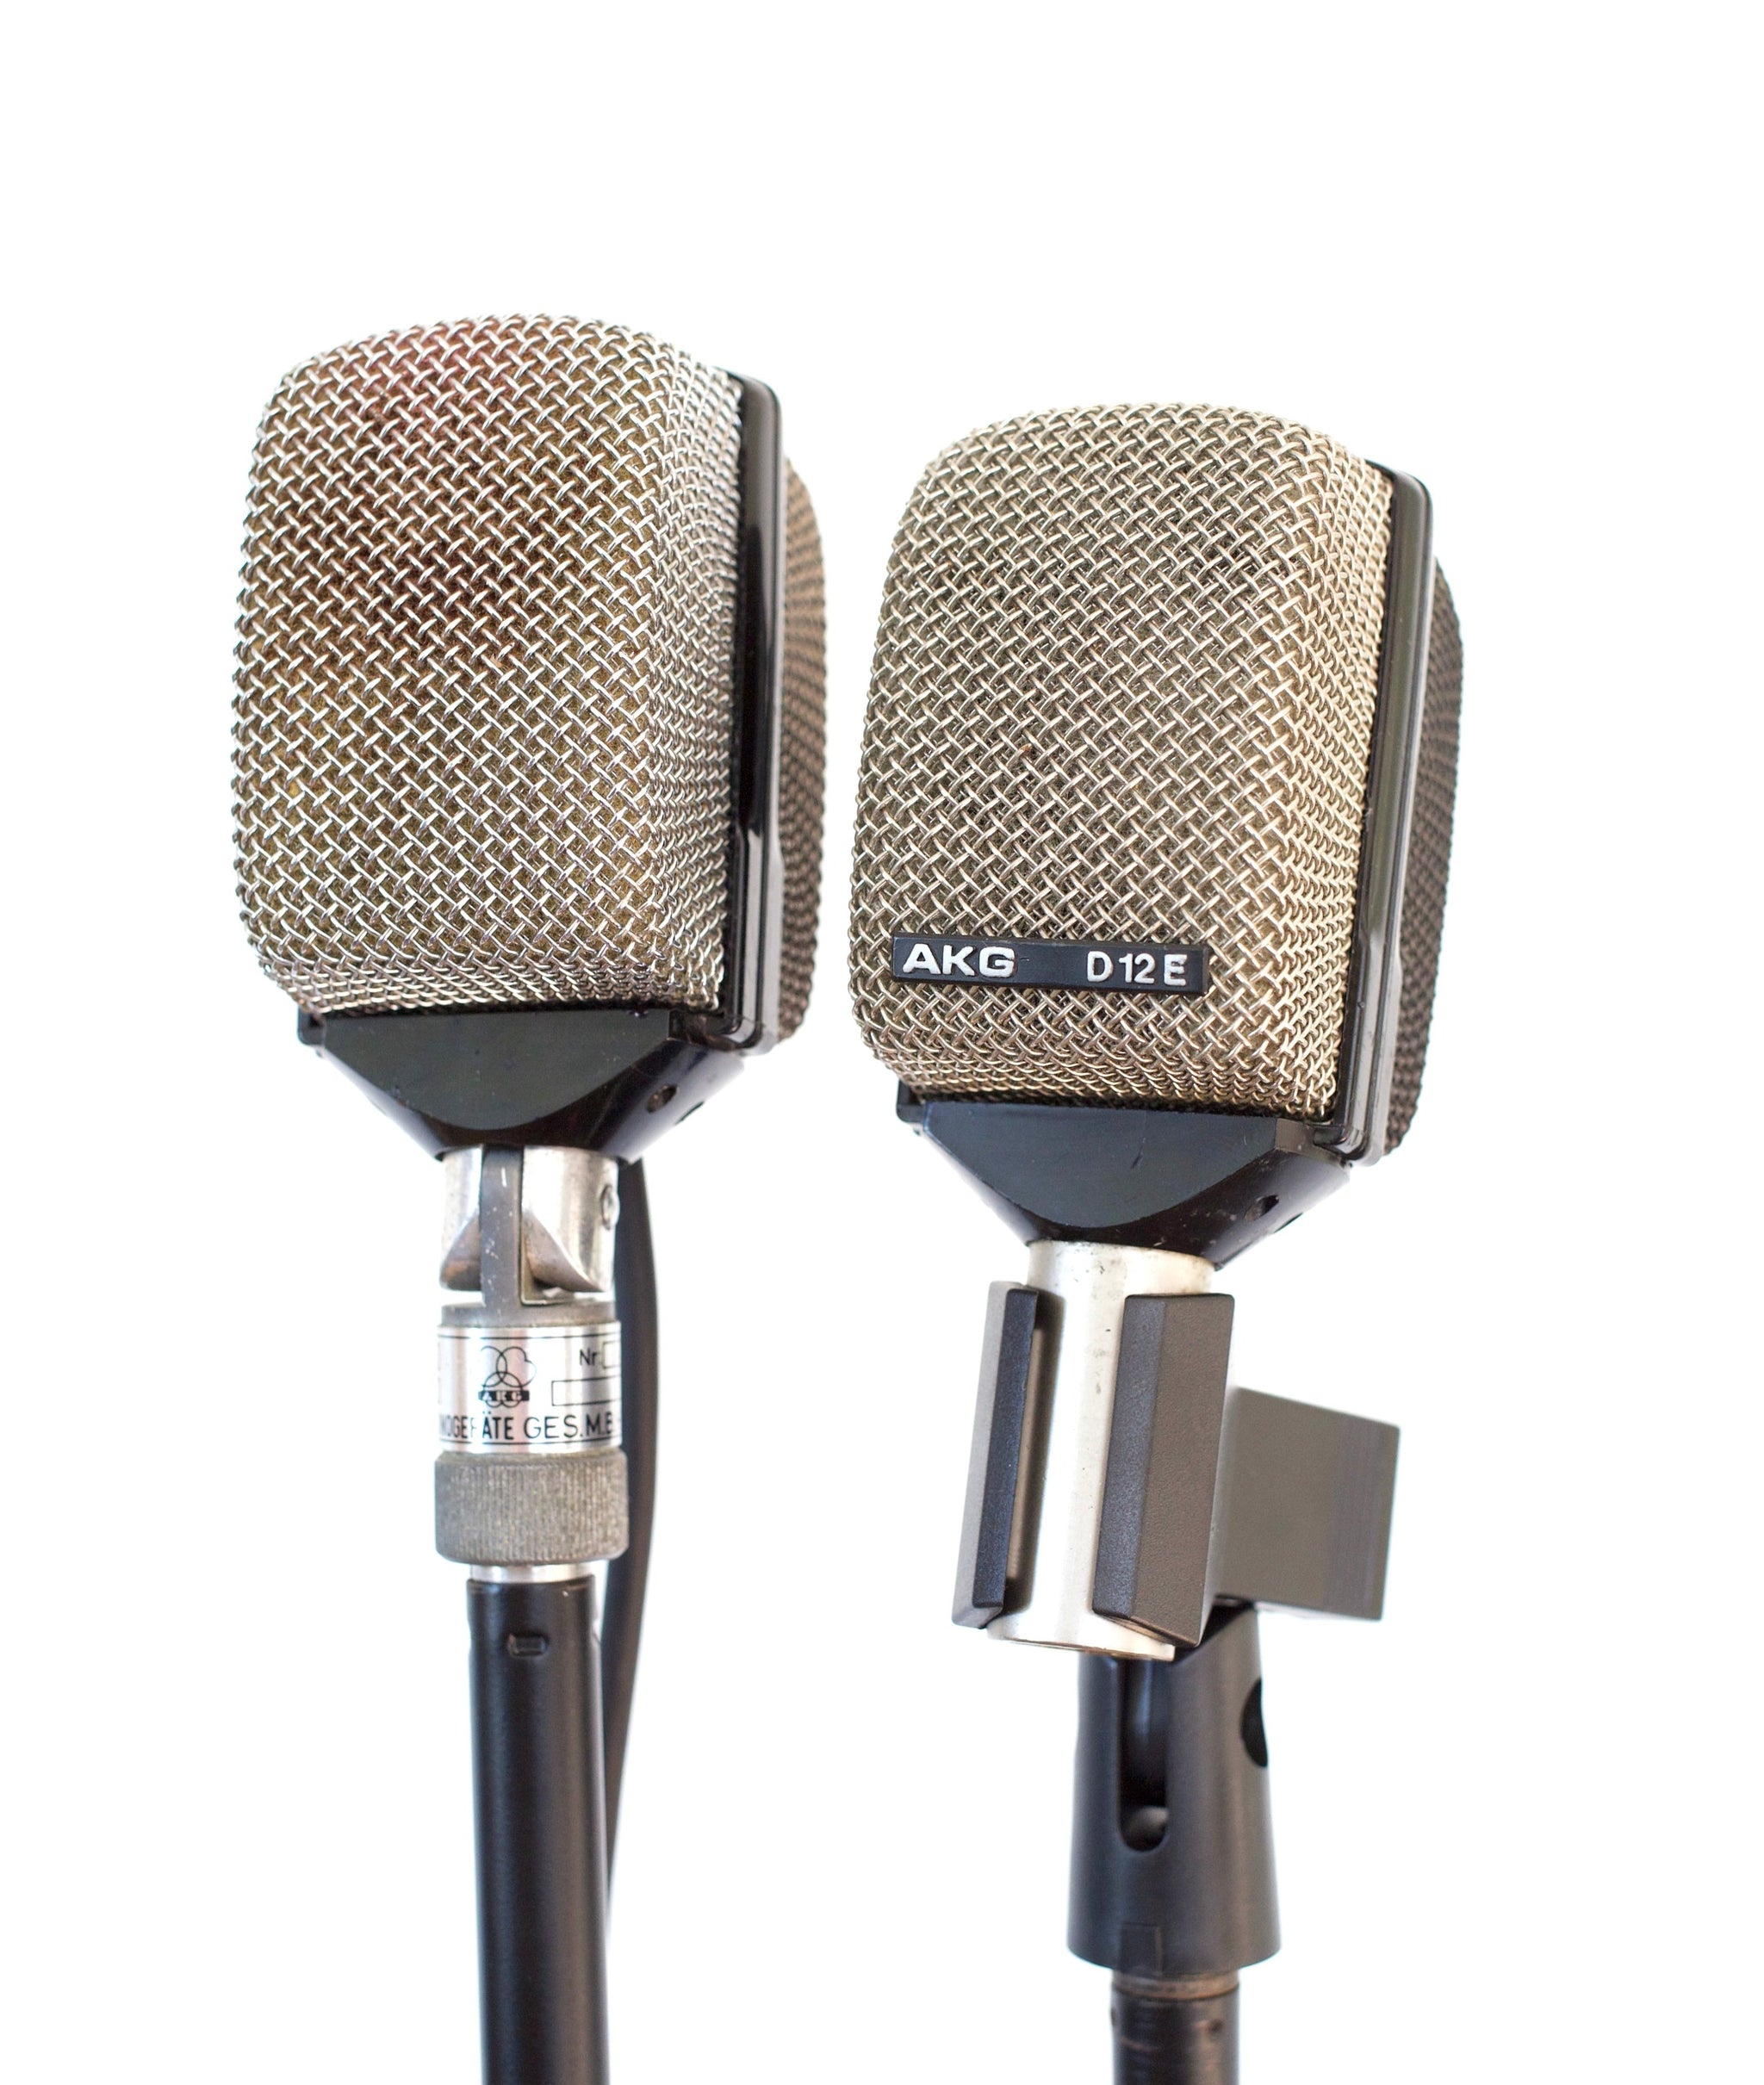 AKG D12 Dynamic Microphone (Modded W/ Beyer M380 Capsule)